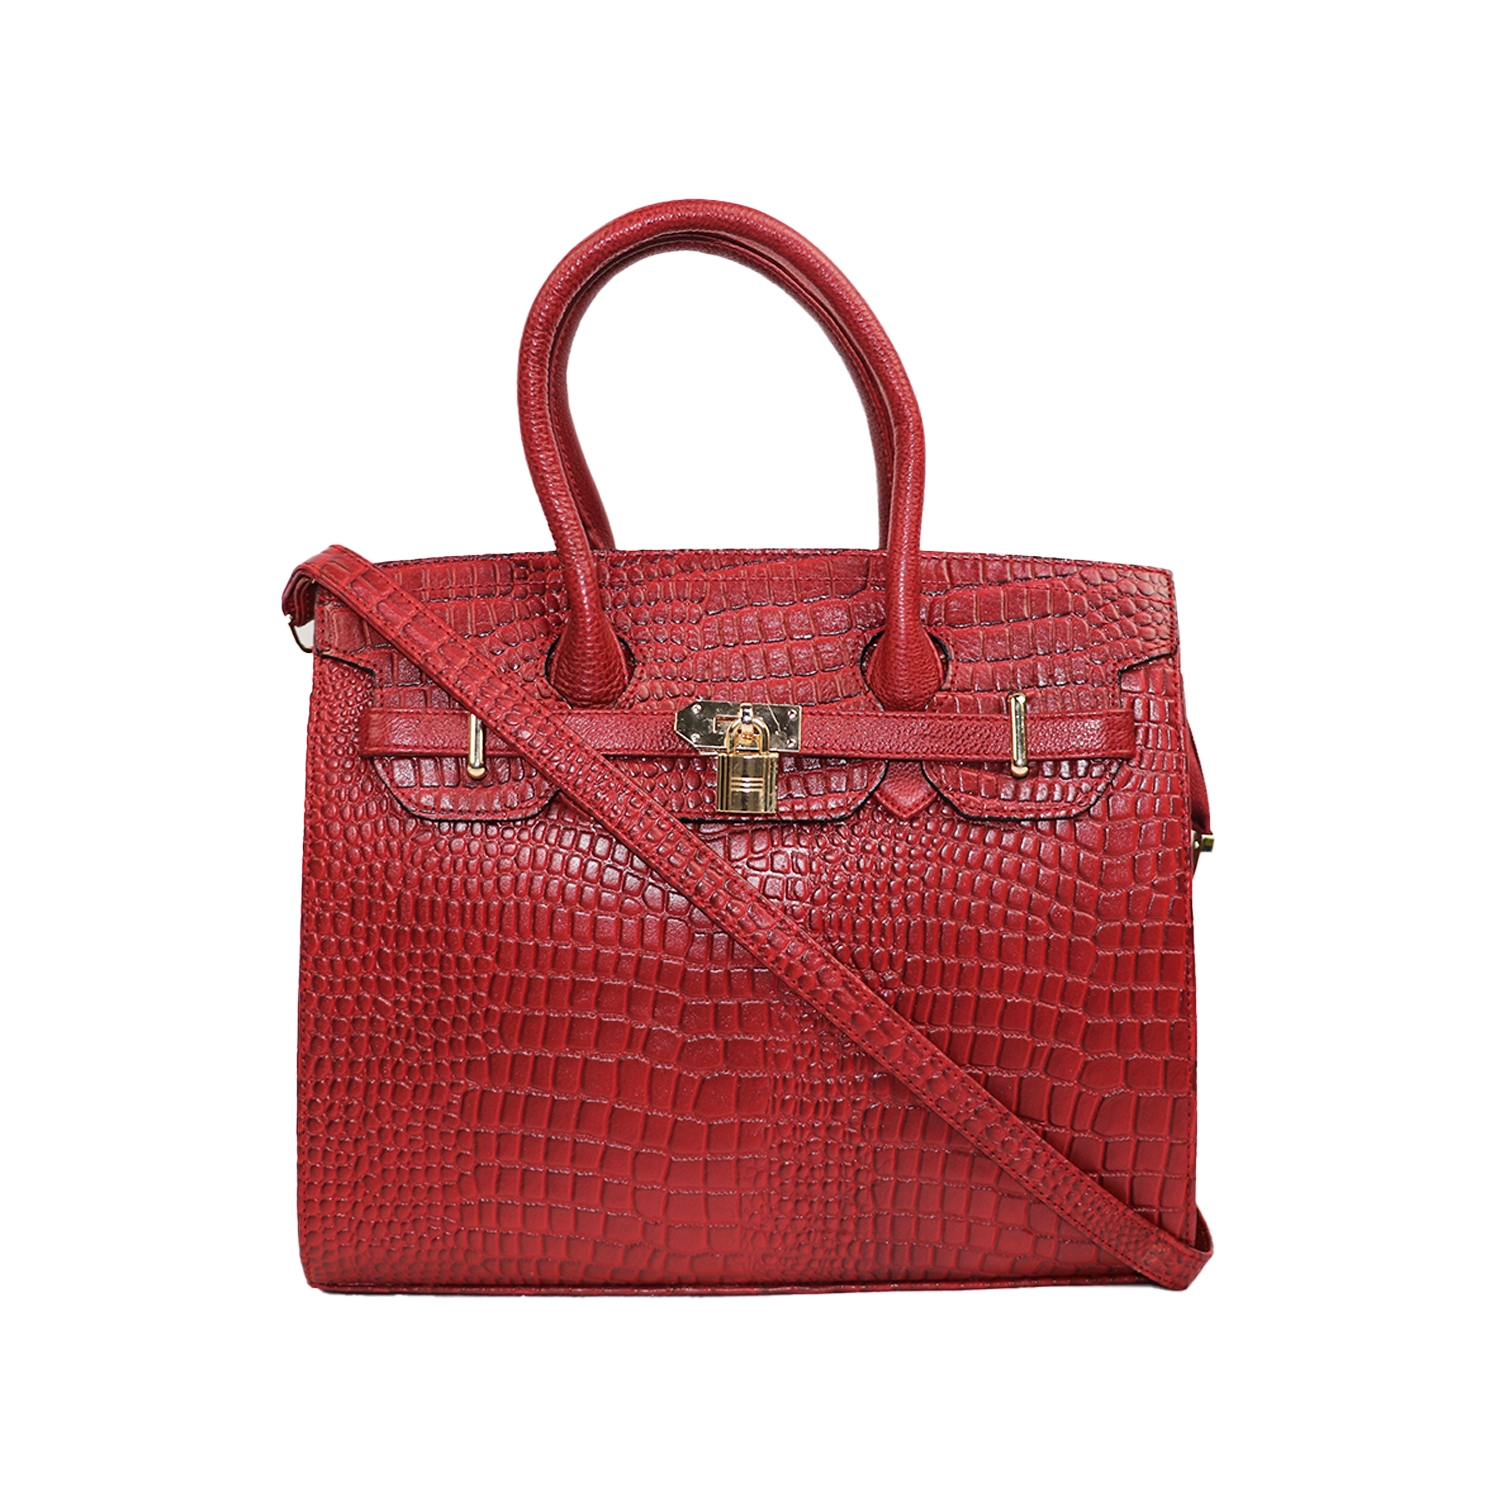 EMM | Women's Leather Crocodile Handbag Crossbody Bag for Women | Cherry Red